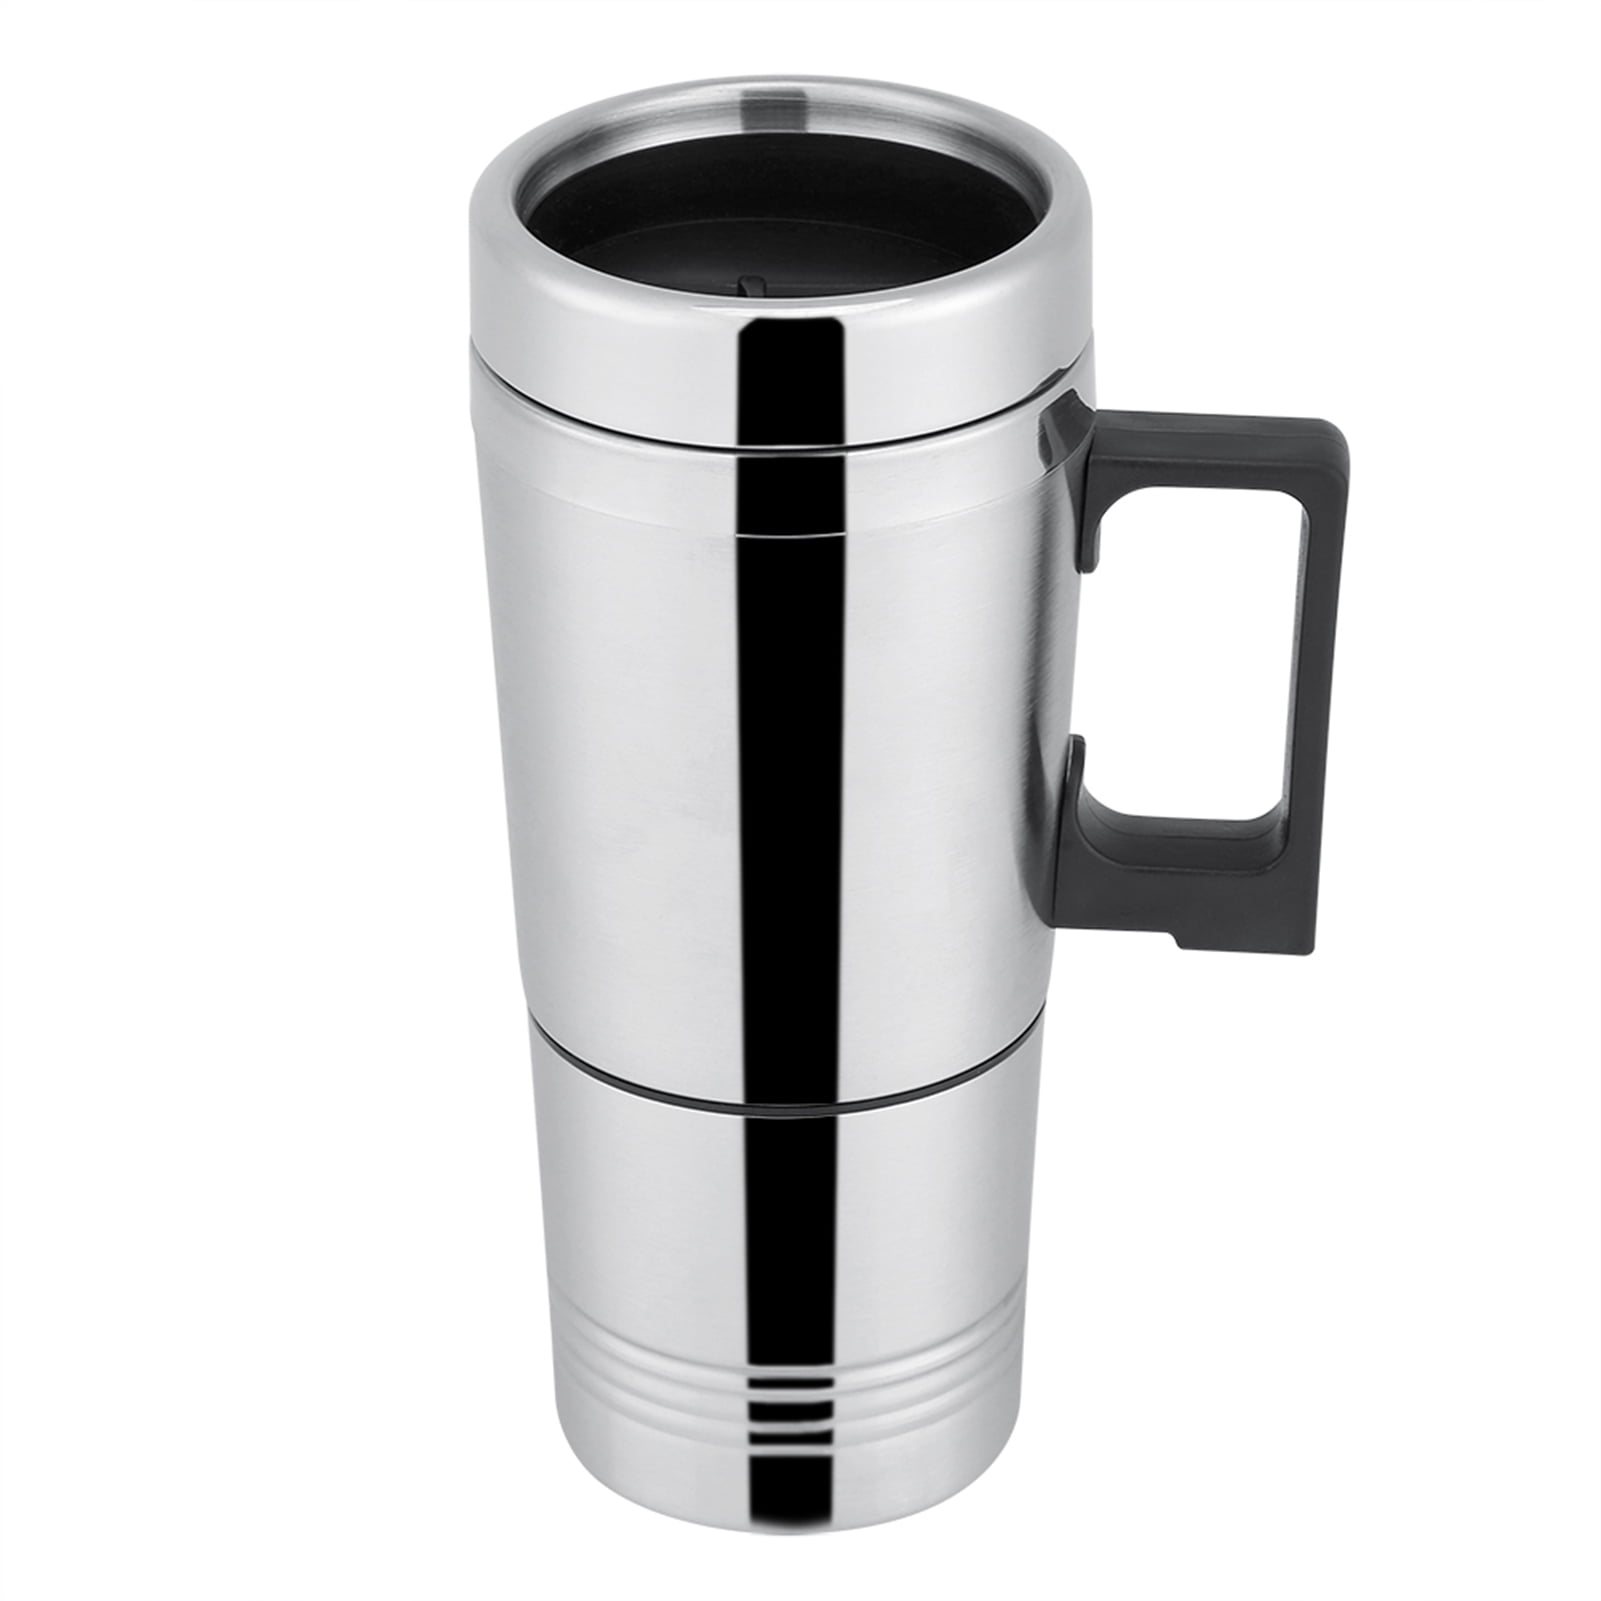 Heated Travel Mug, Heated Coffee Mug Warmer Electric Car Cup, 12V